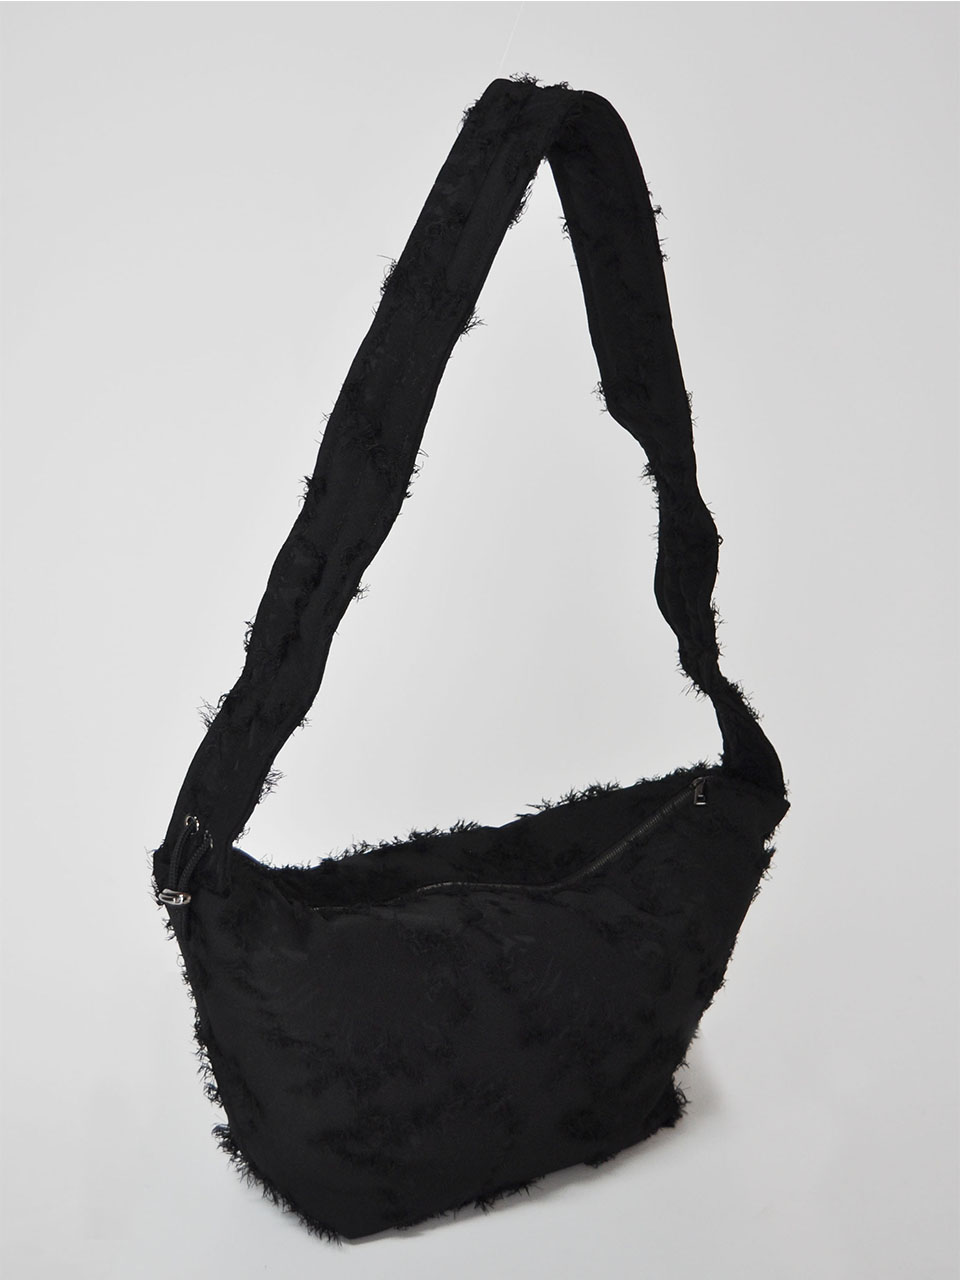 Porcelain bag - Black / ポーセリンバッグ-ブラック | rysm | HANA(ハナ) #6